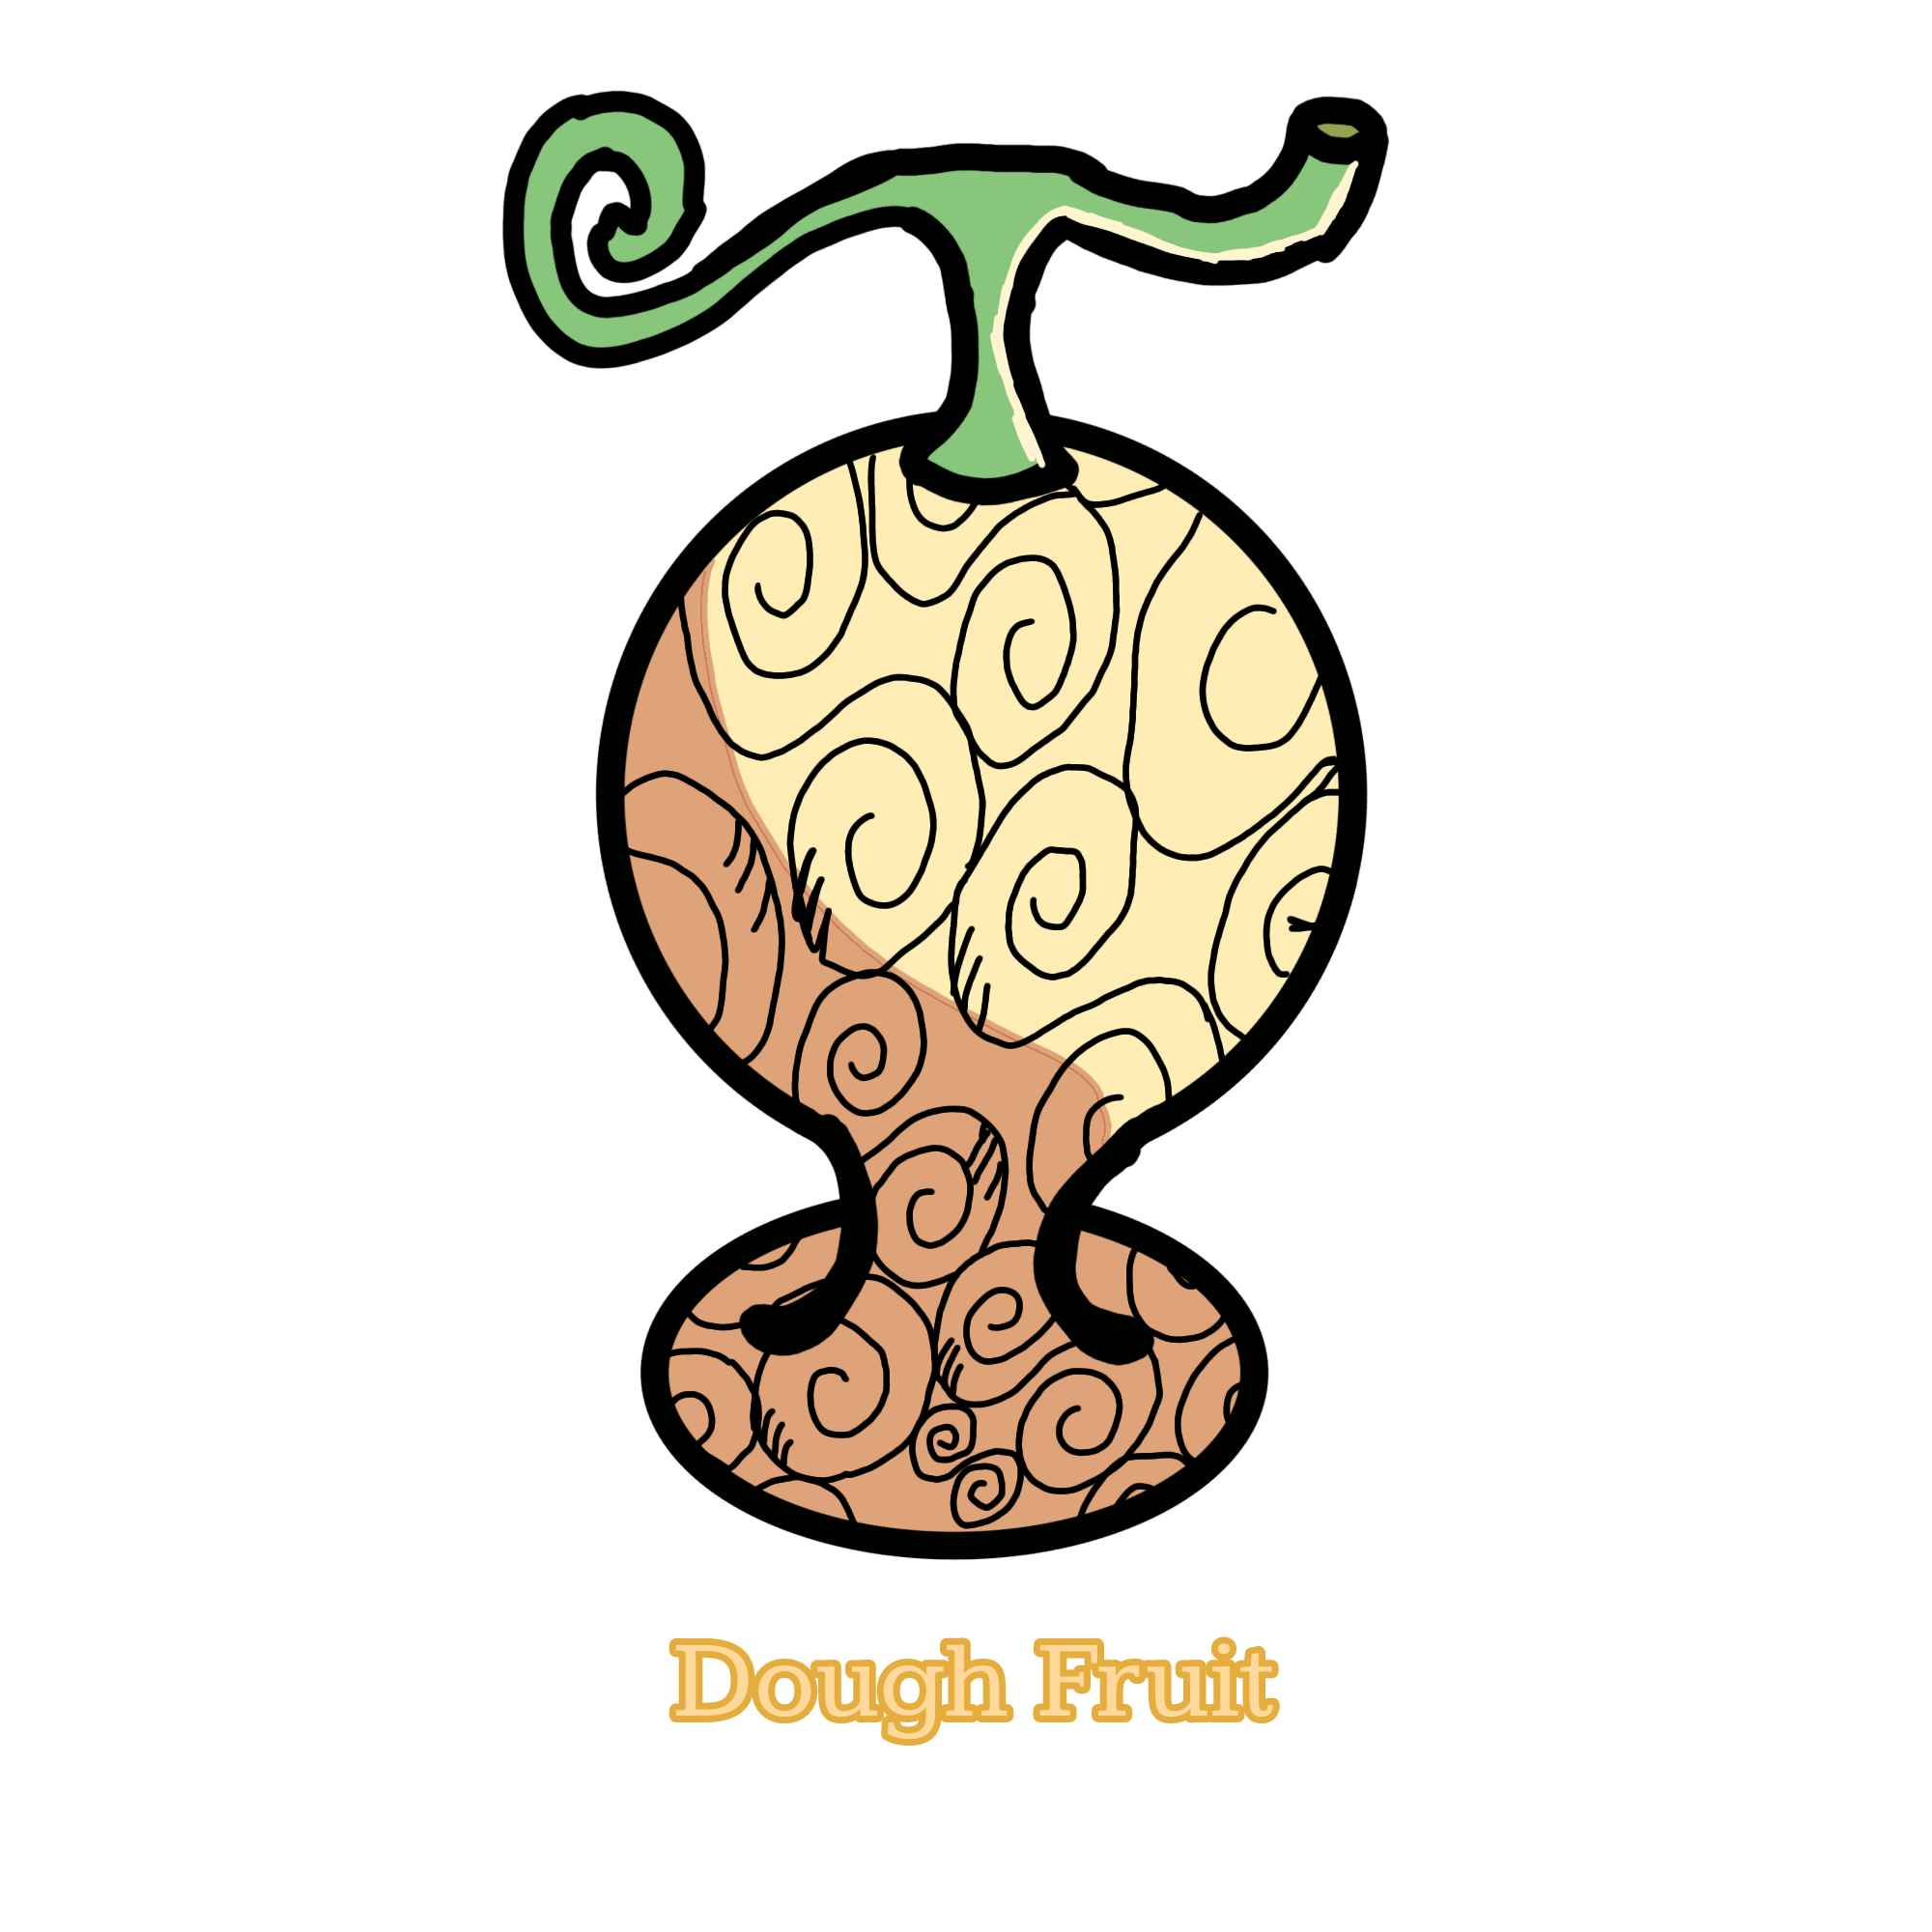 Touhou, girl, illustration / [#1] Dough fruit (Blox fruit) - pixiv